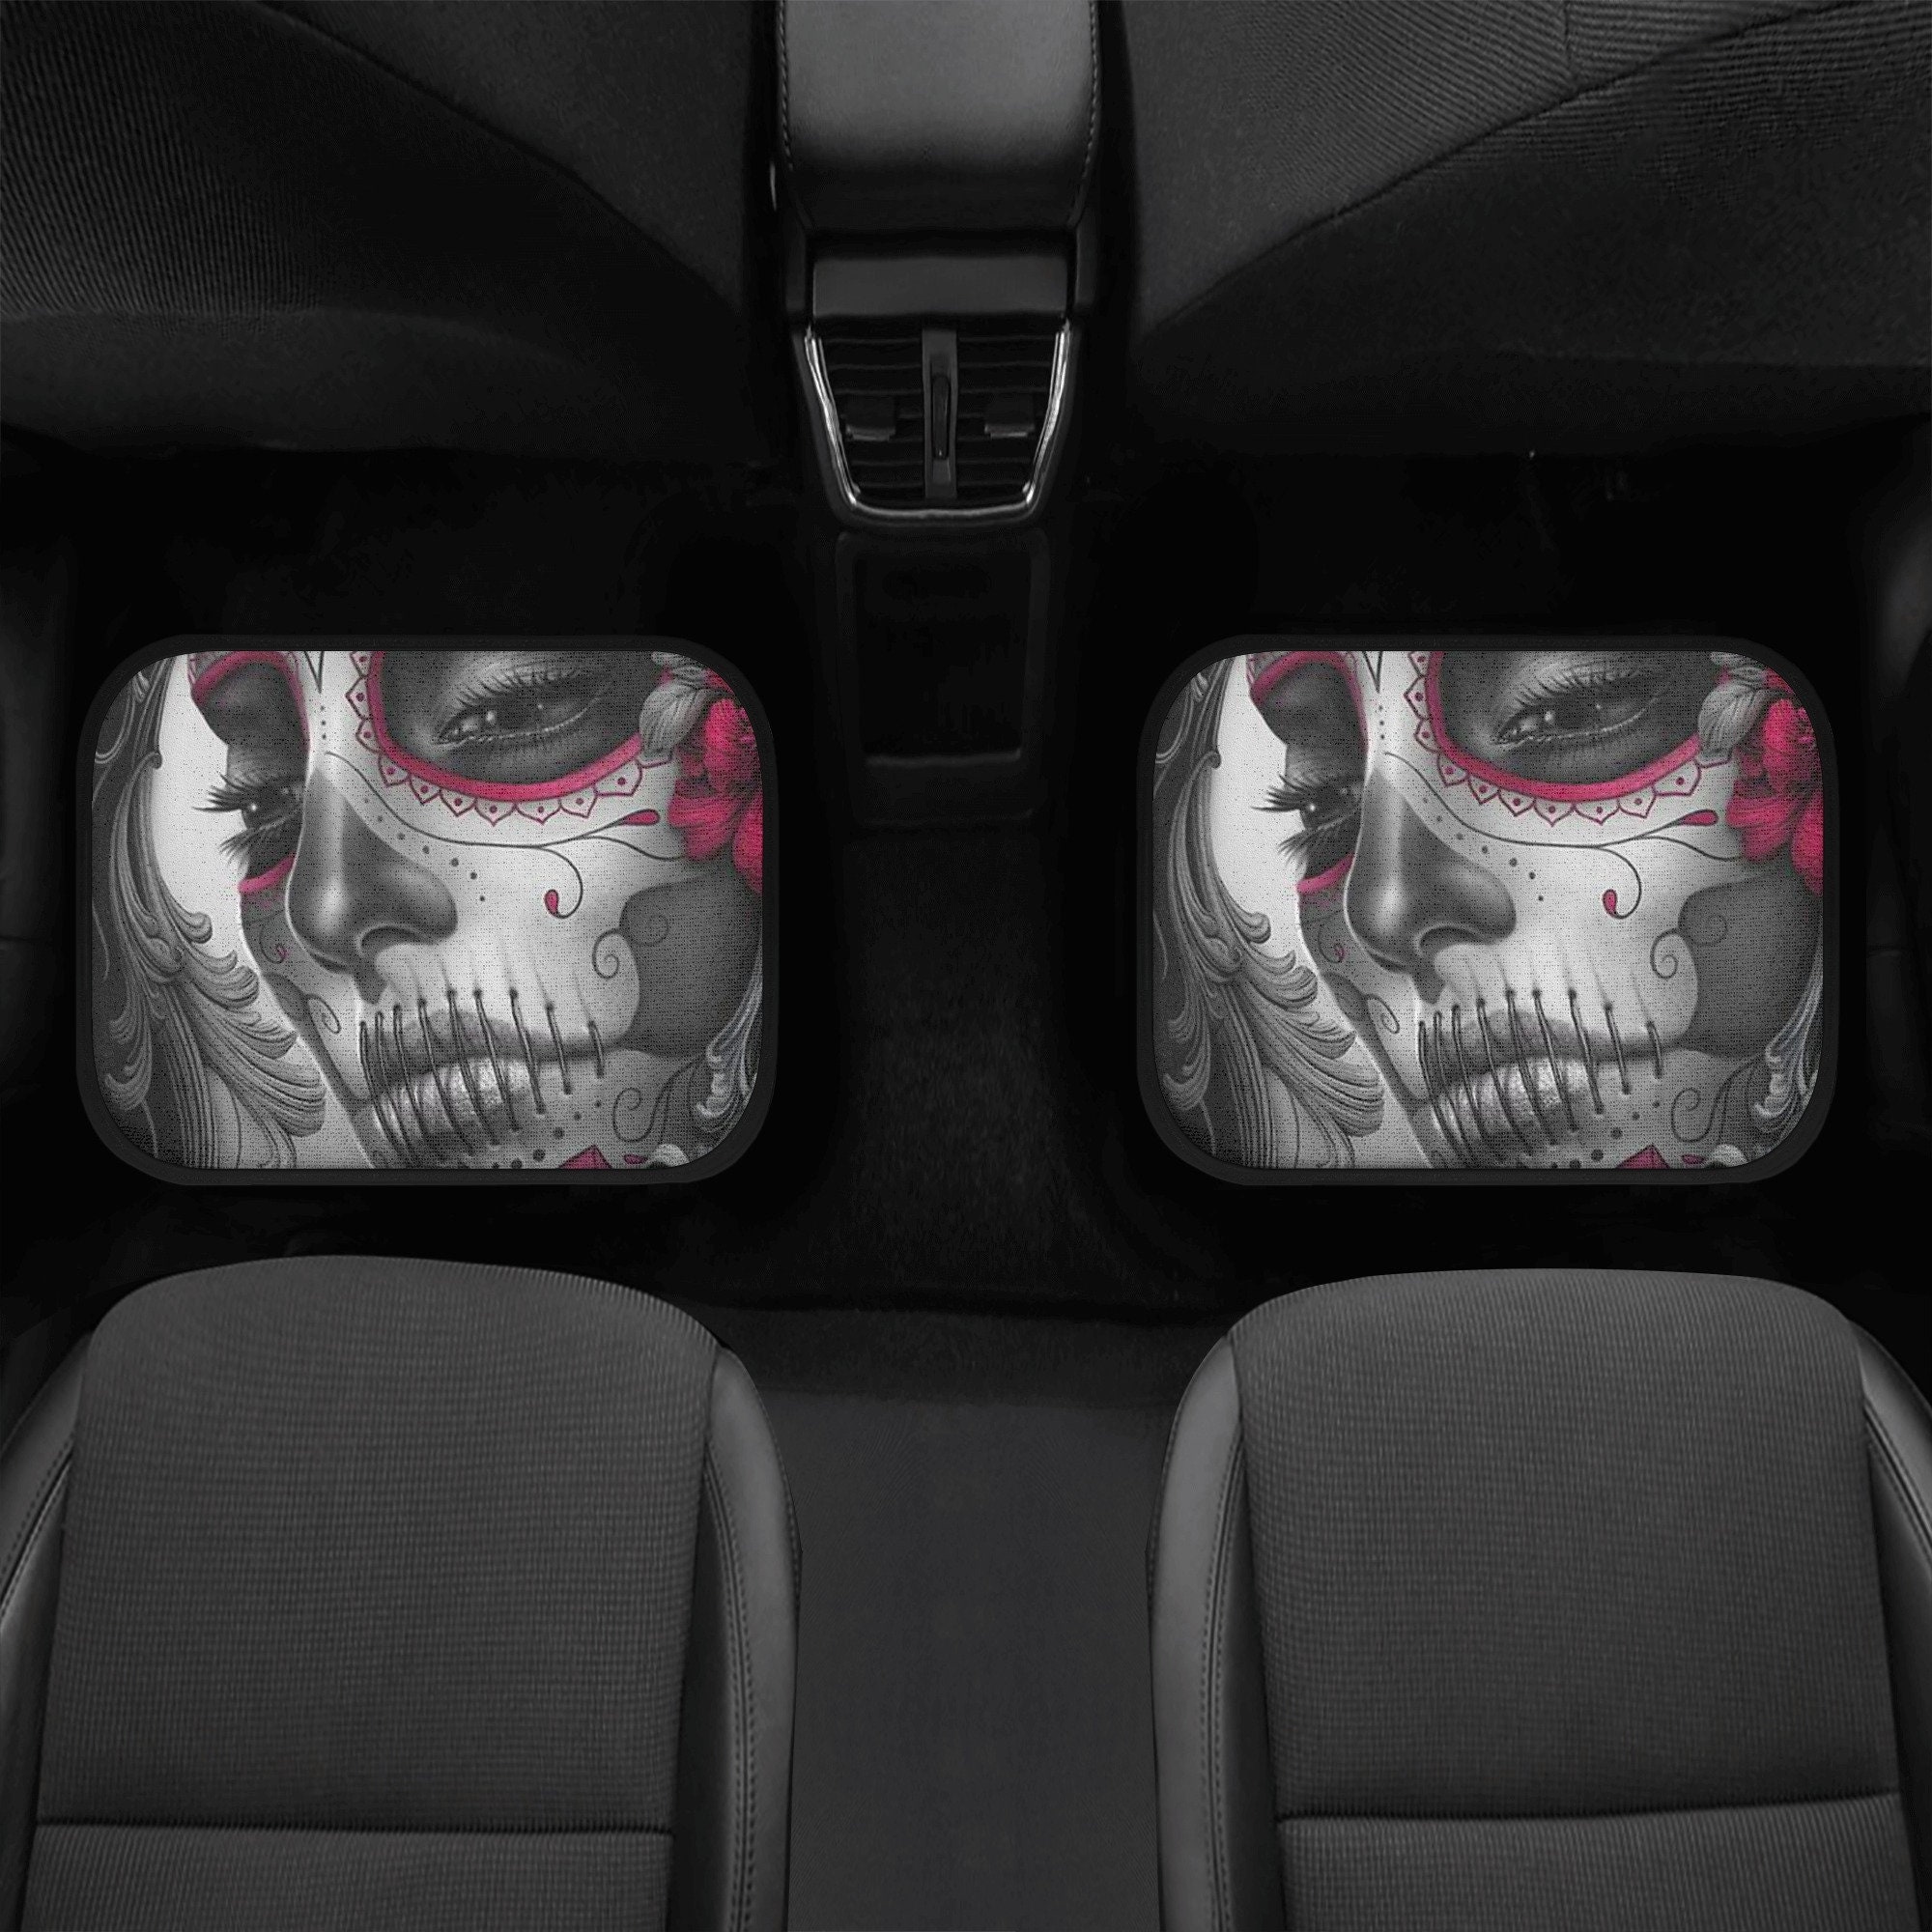 Sugar Skulls & Flowers Design Custom Car Seat Covers - Set of Two